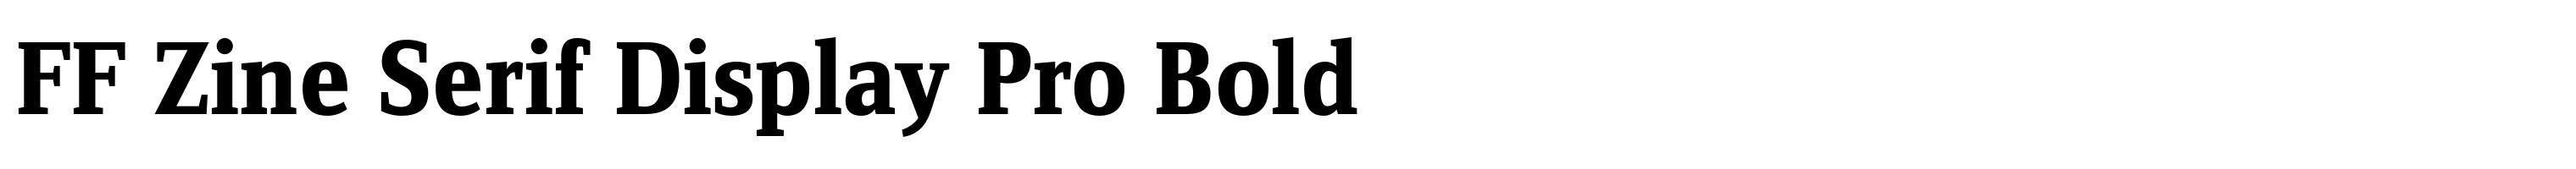 FF Zine Serif Display Pro Bold